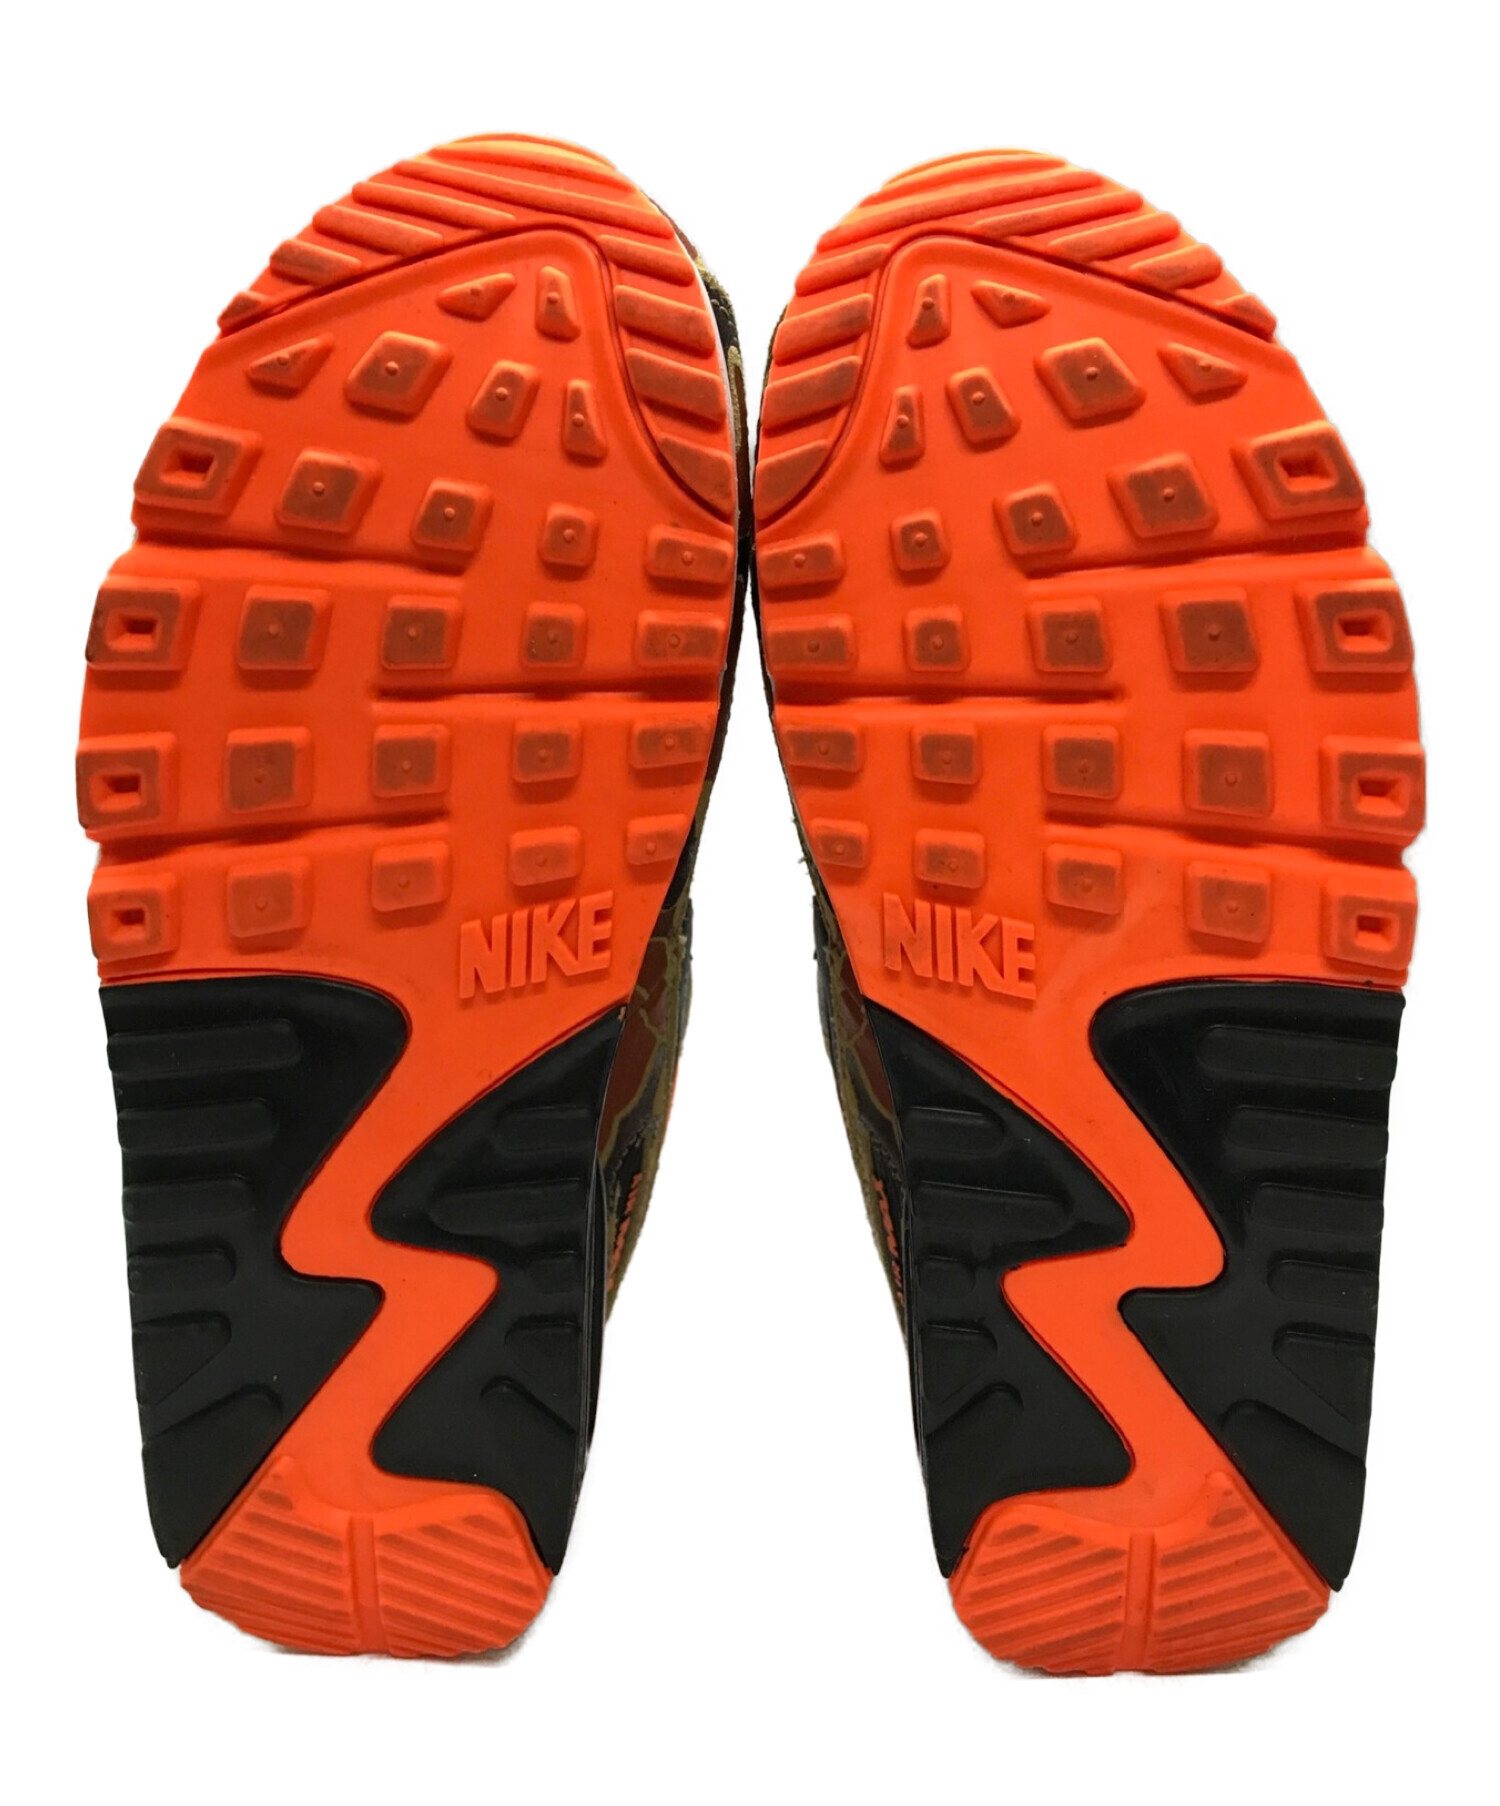 NIKE (ナイキ) Nike Air Max 90 Duck Camo オレンジ サイズ:25